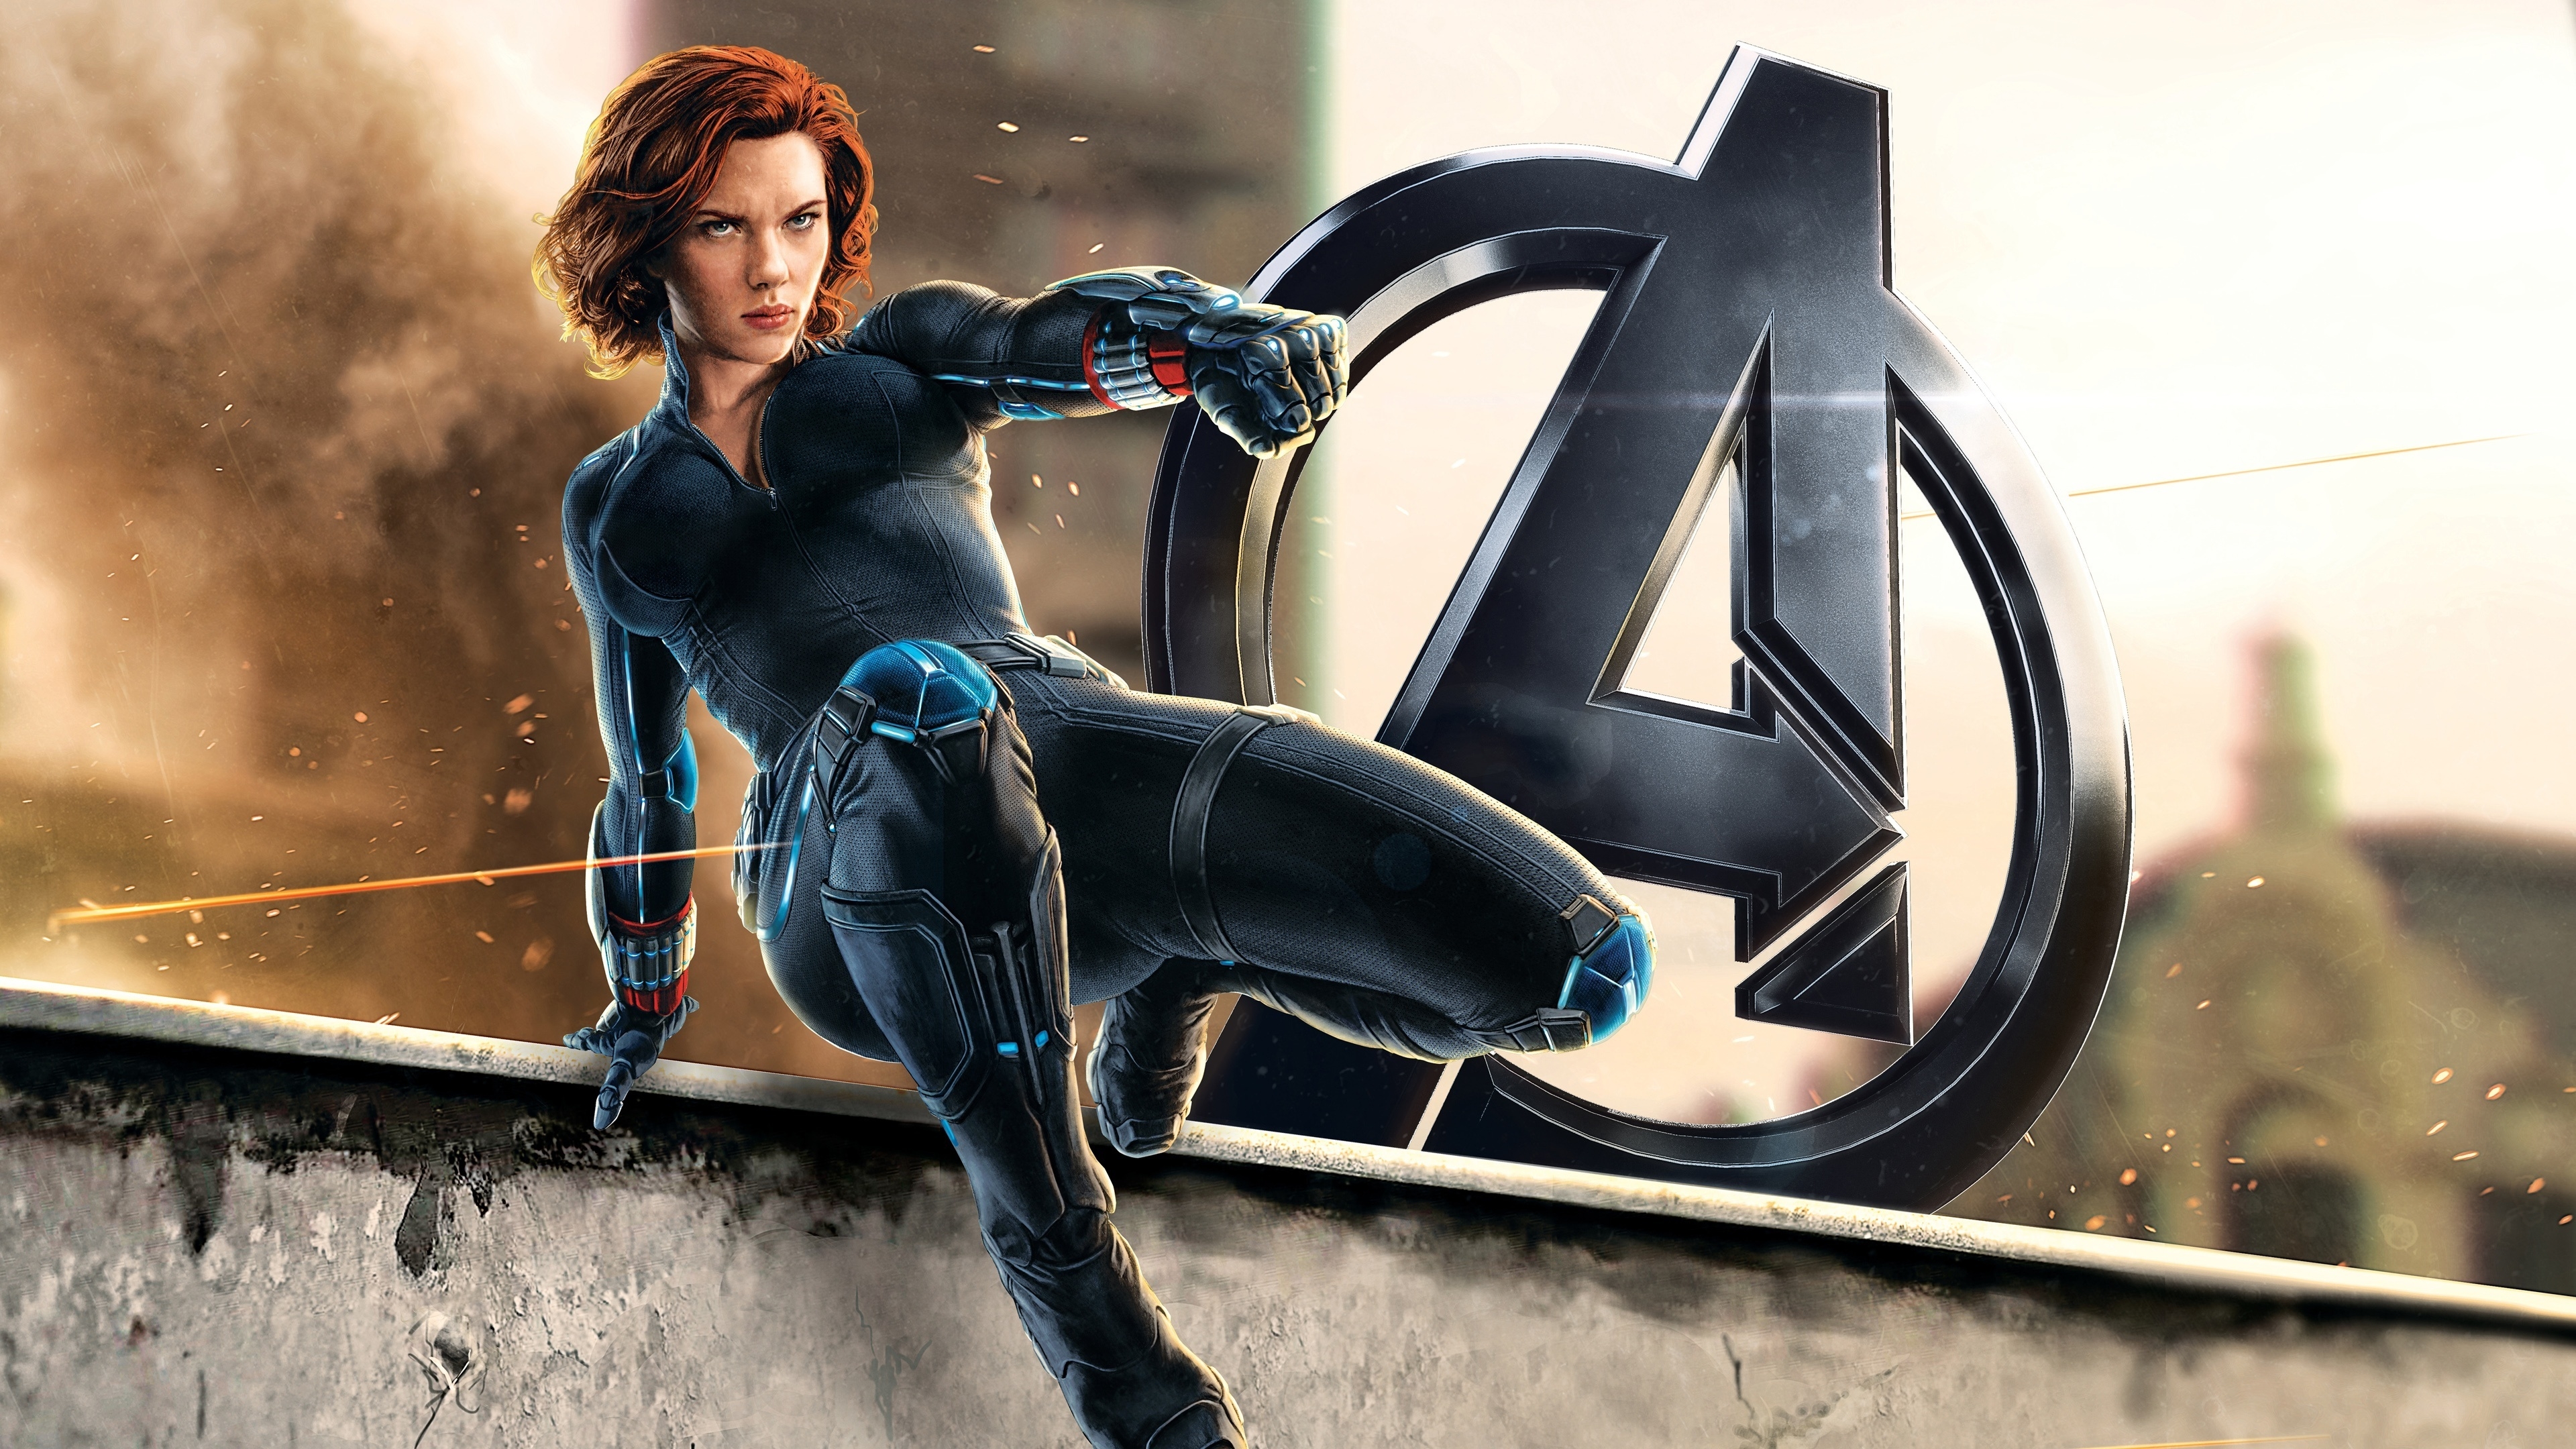 Black Widow Avengers 2 for 3840 x 2160 Ultra HD resolution